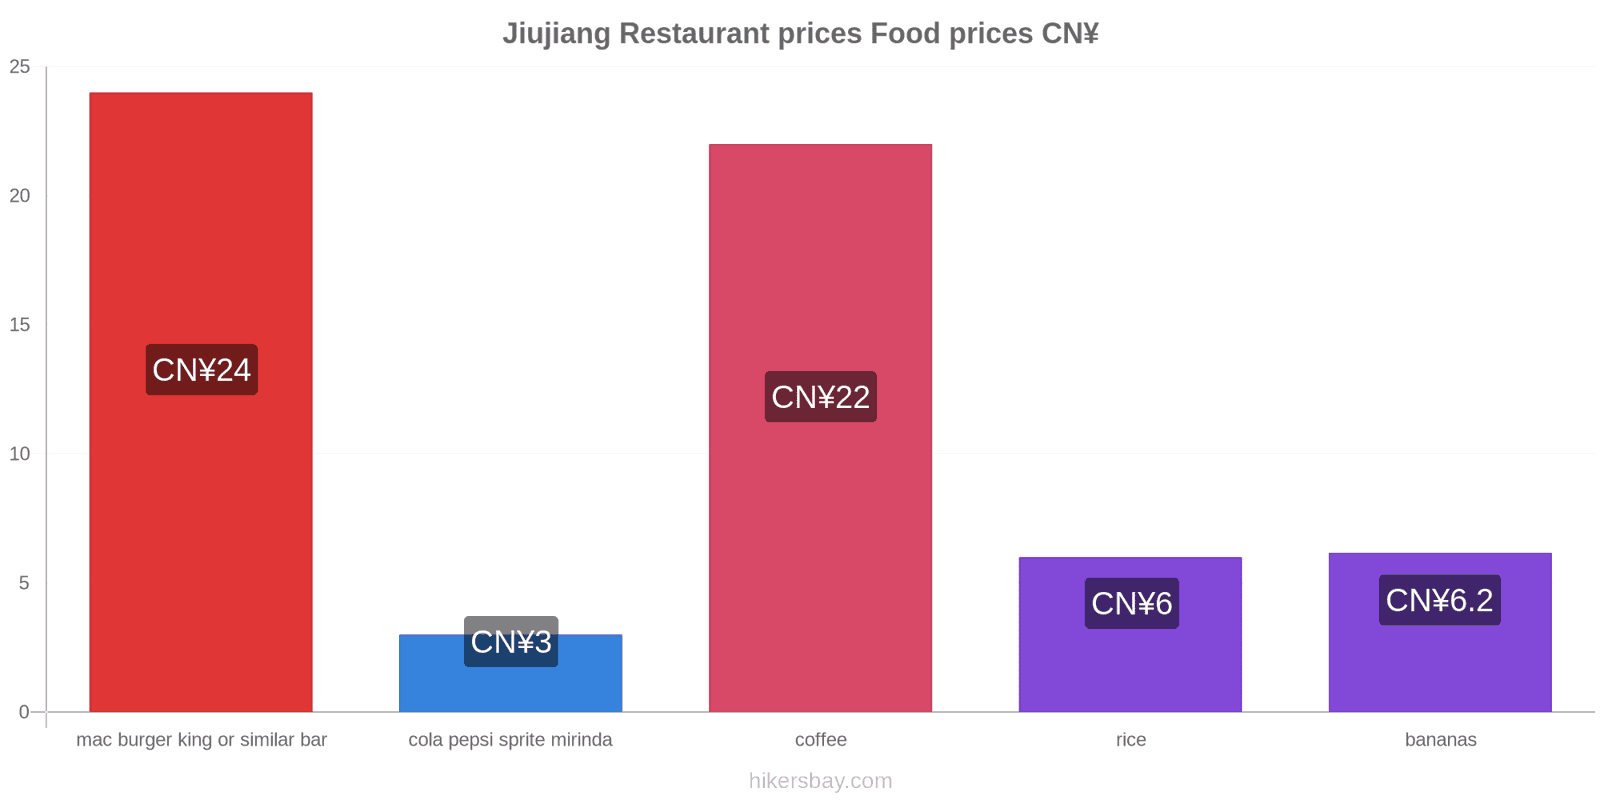 Jiujiang price changes hikersbay.com